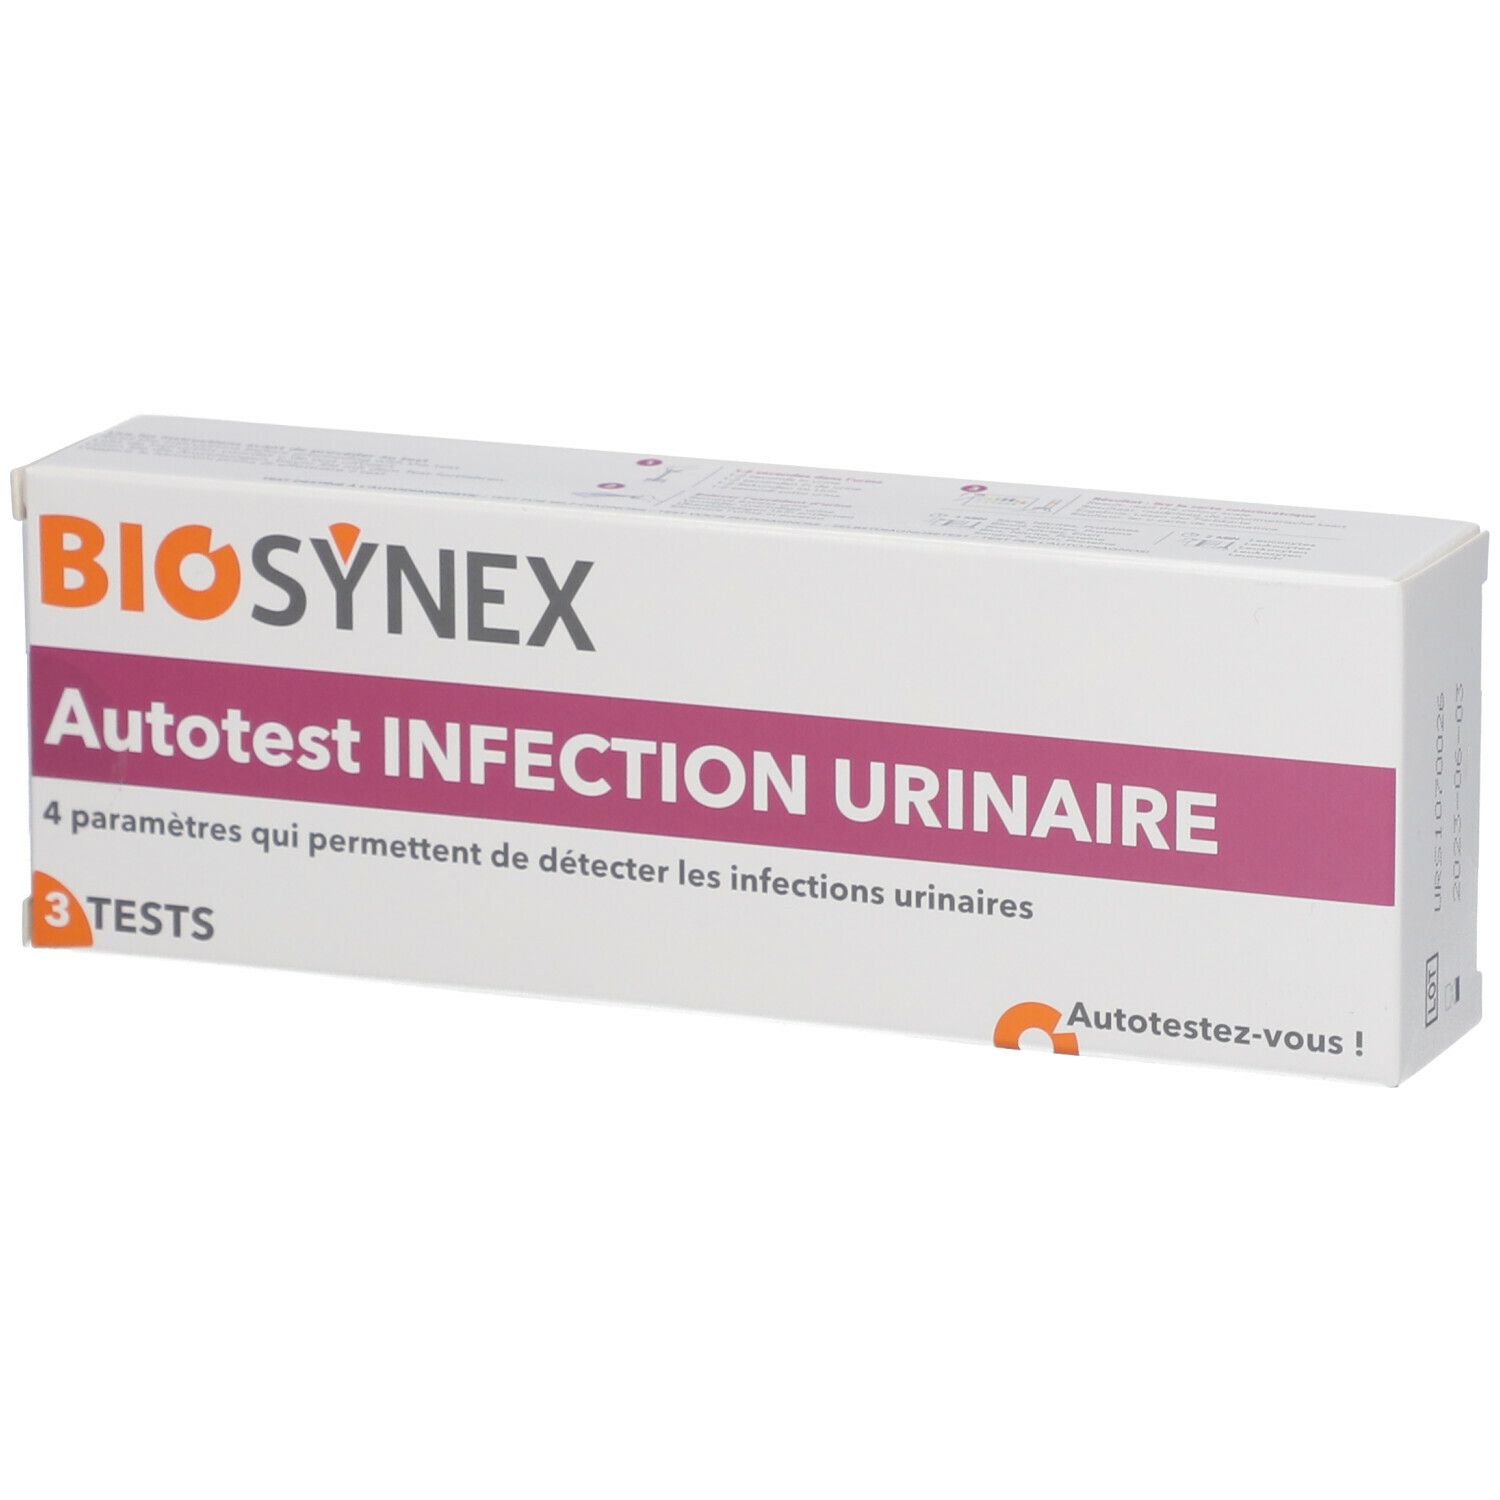 meSoigner - Exacto Test Infections Urinaires B/3